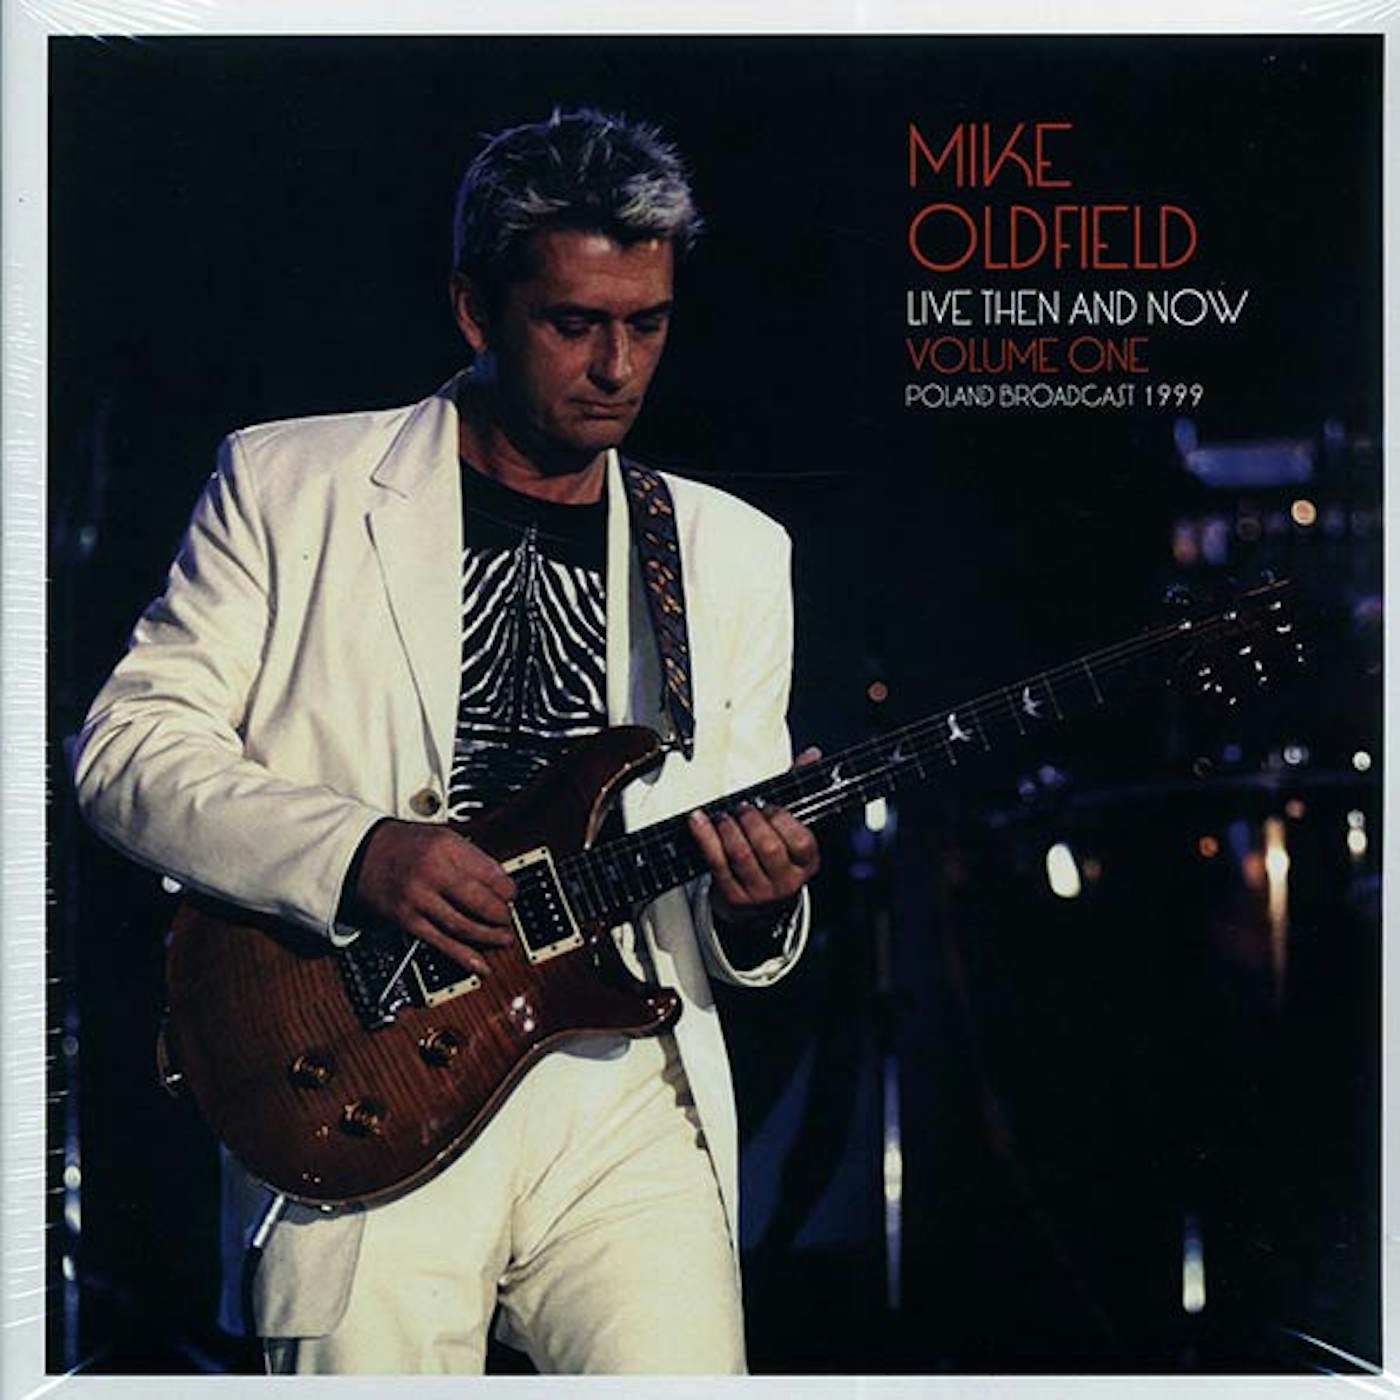 Mike Oldfield  LP -  Live Then & Now Volume 1: Poland Broadcast 1999 (2xLP) (Vinyl)